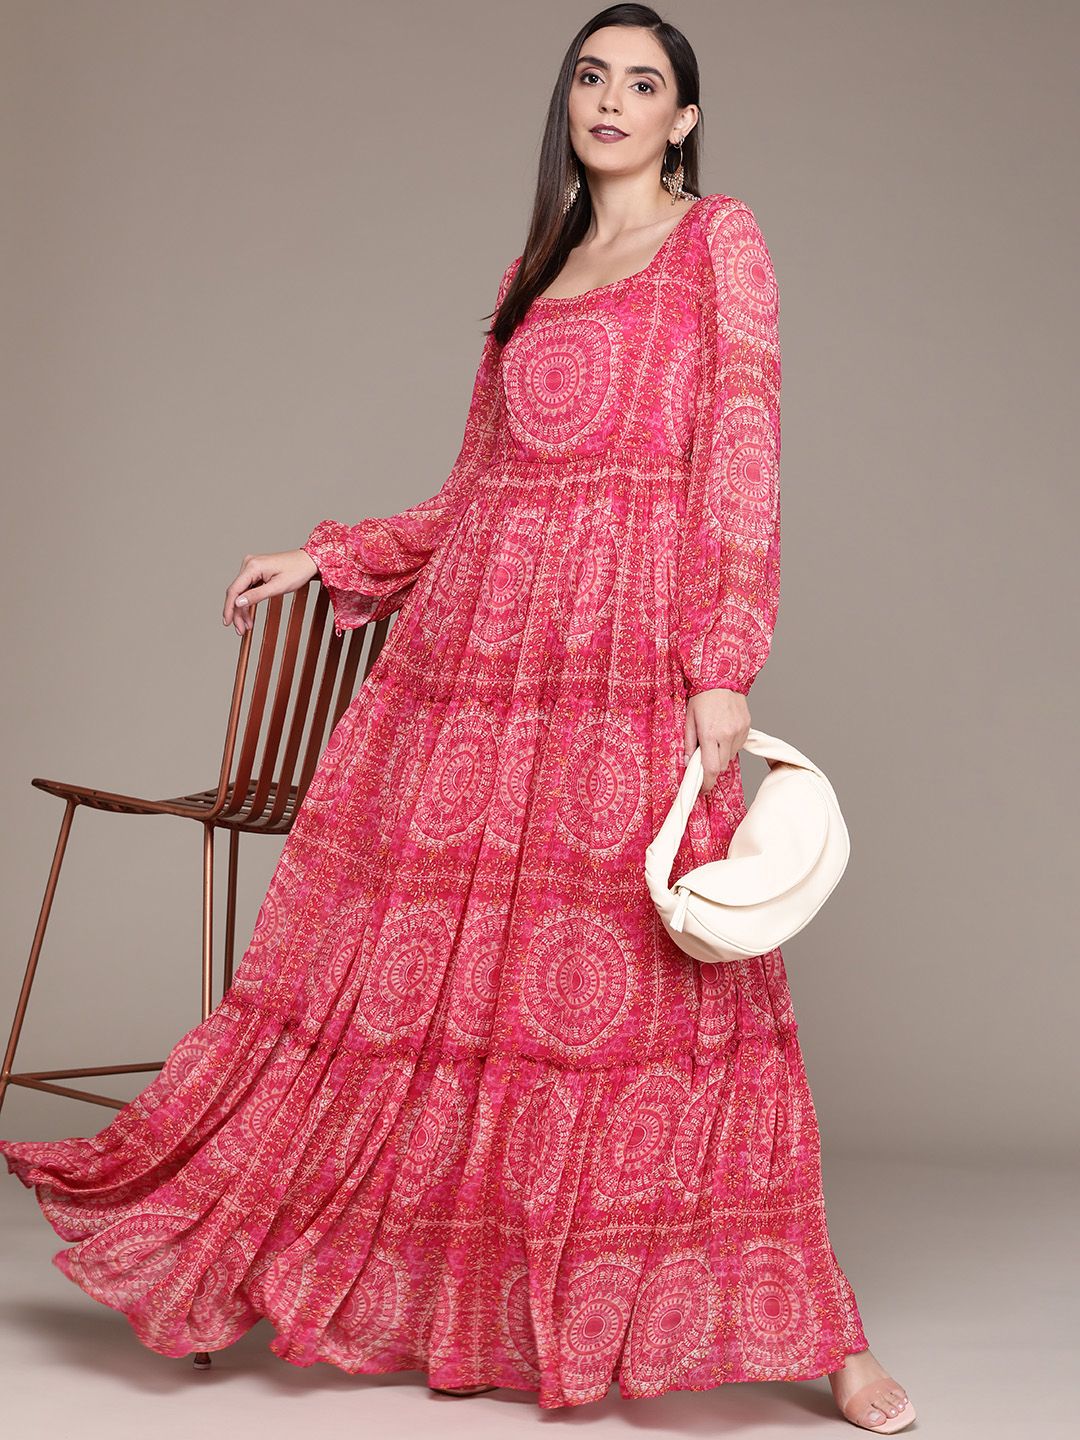 aarke Ritu Kumar Women Pink & Off White Abstract Printed Maxi Dress Price in India